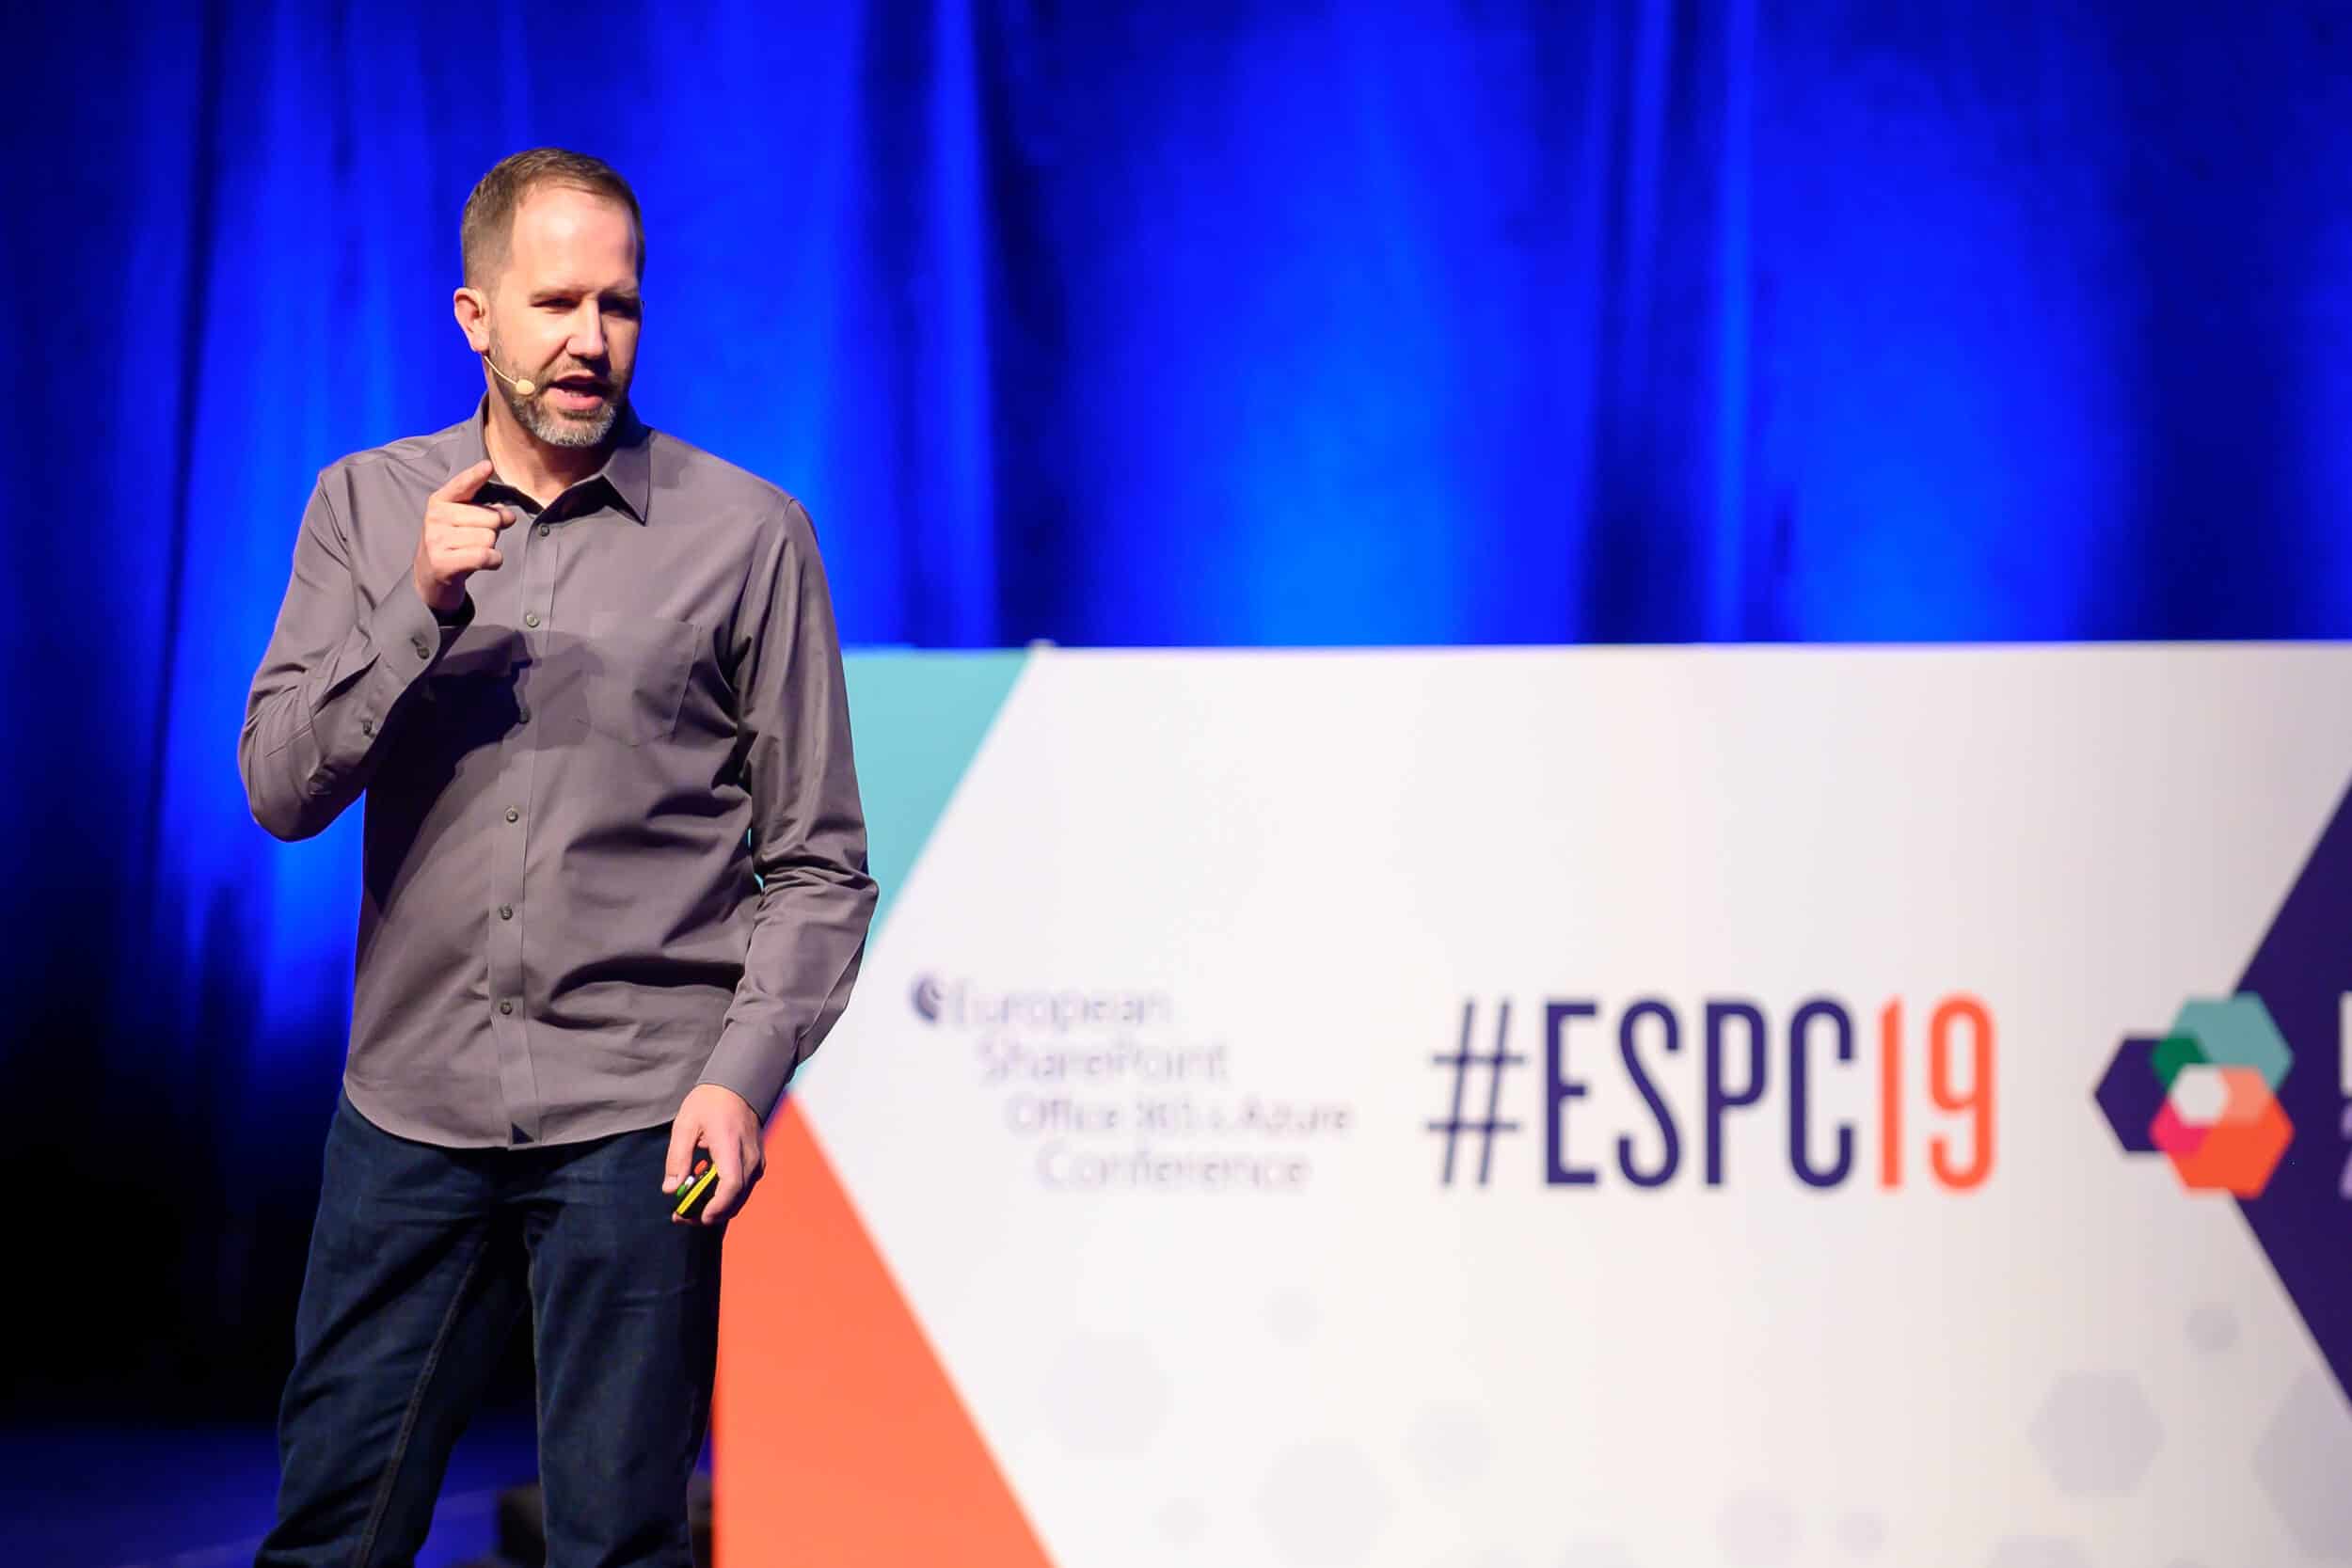 ESPC19 Keynote: JavaScript, The Cloud, and The Rise of the New Virtual Machine with Scott Hanselman